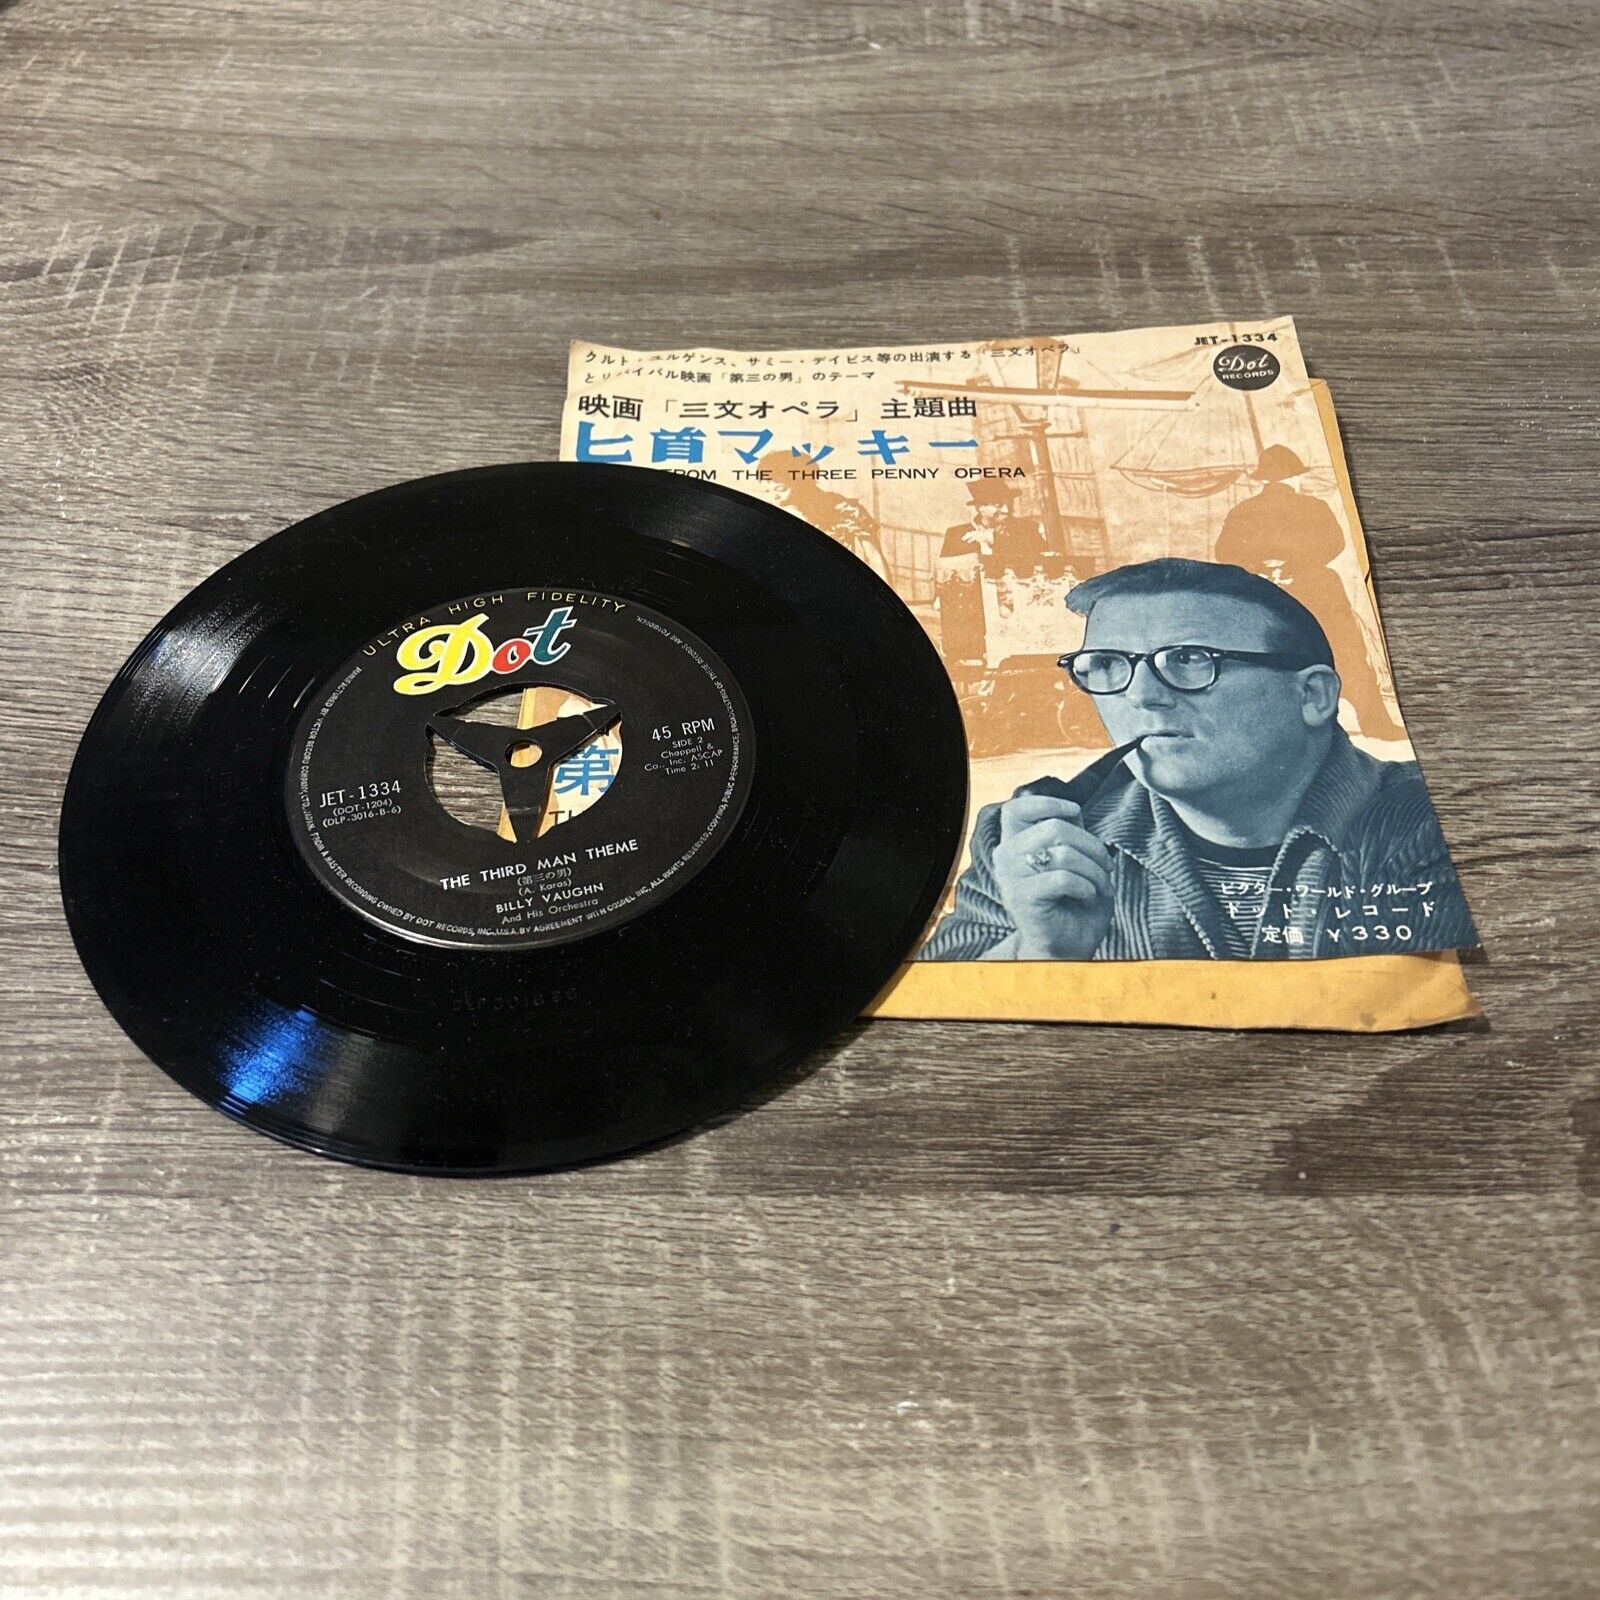 Billy Vaughn The Third Man theme & The Three Penny Opera Vinyl 7”